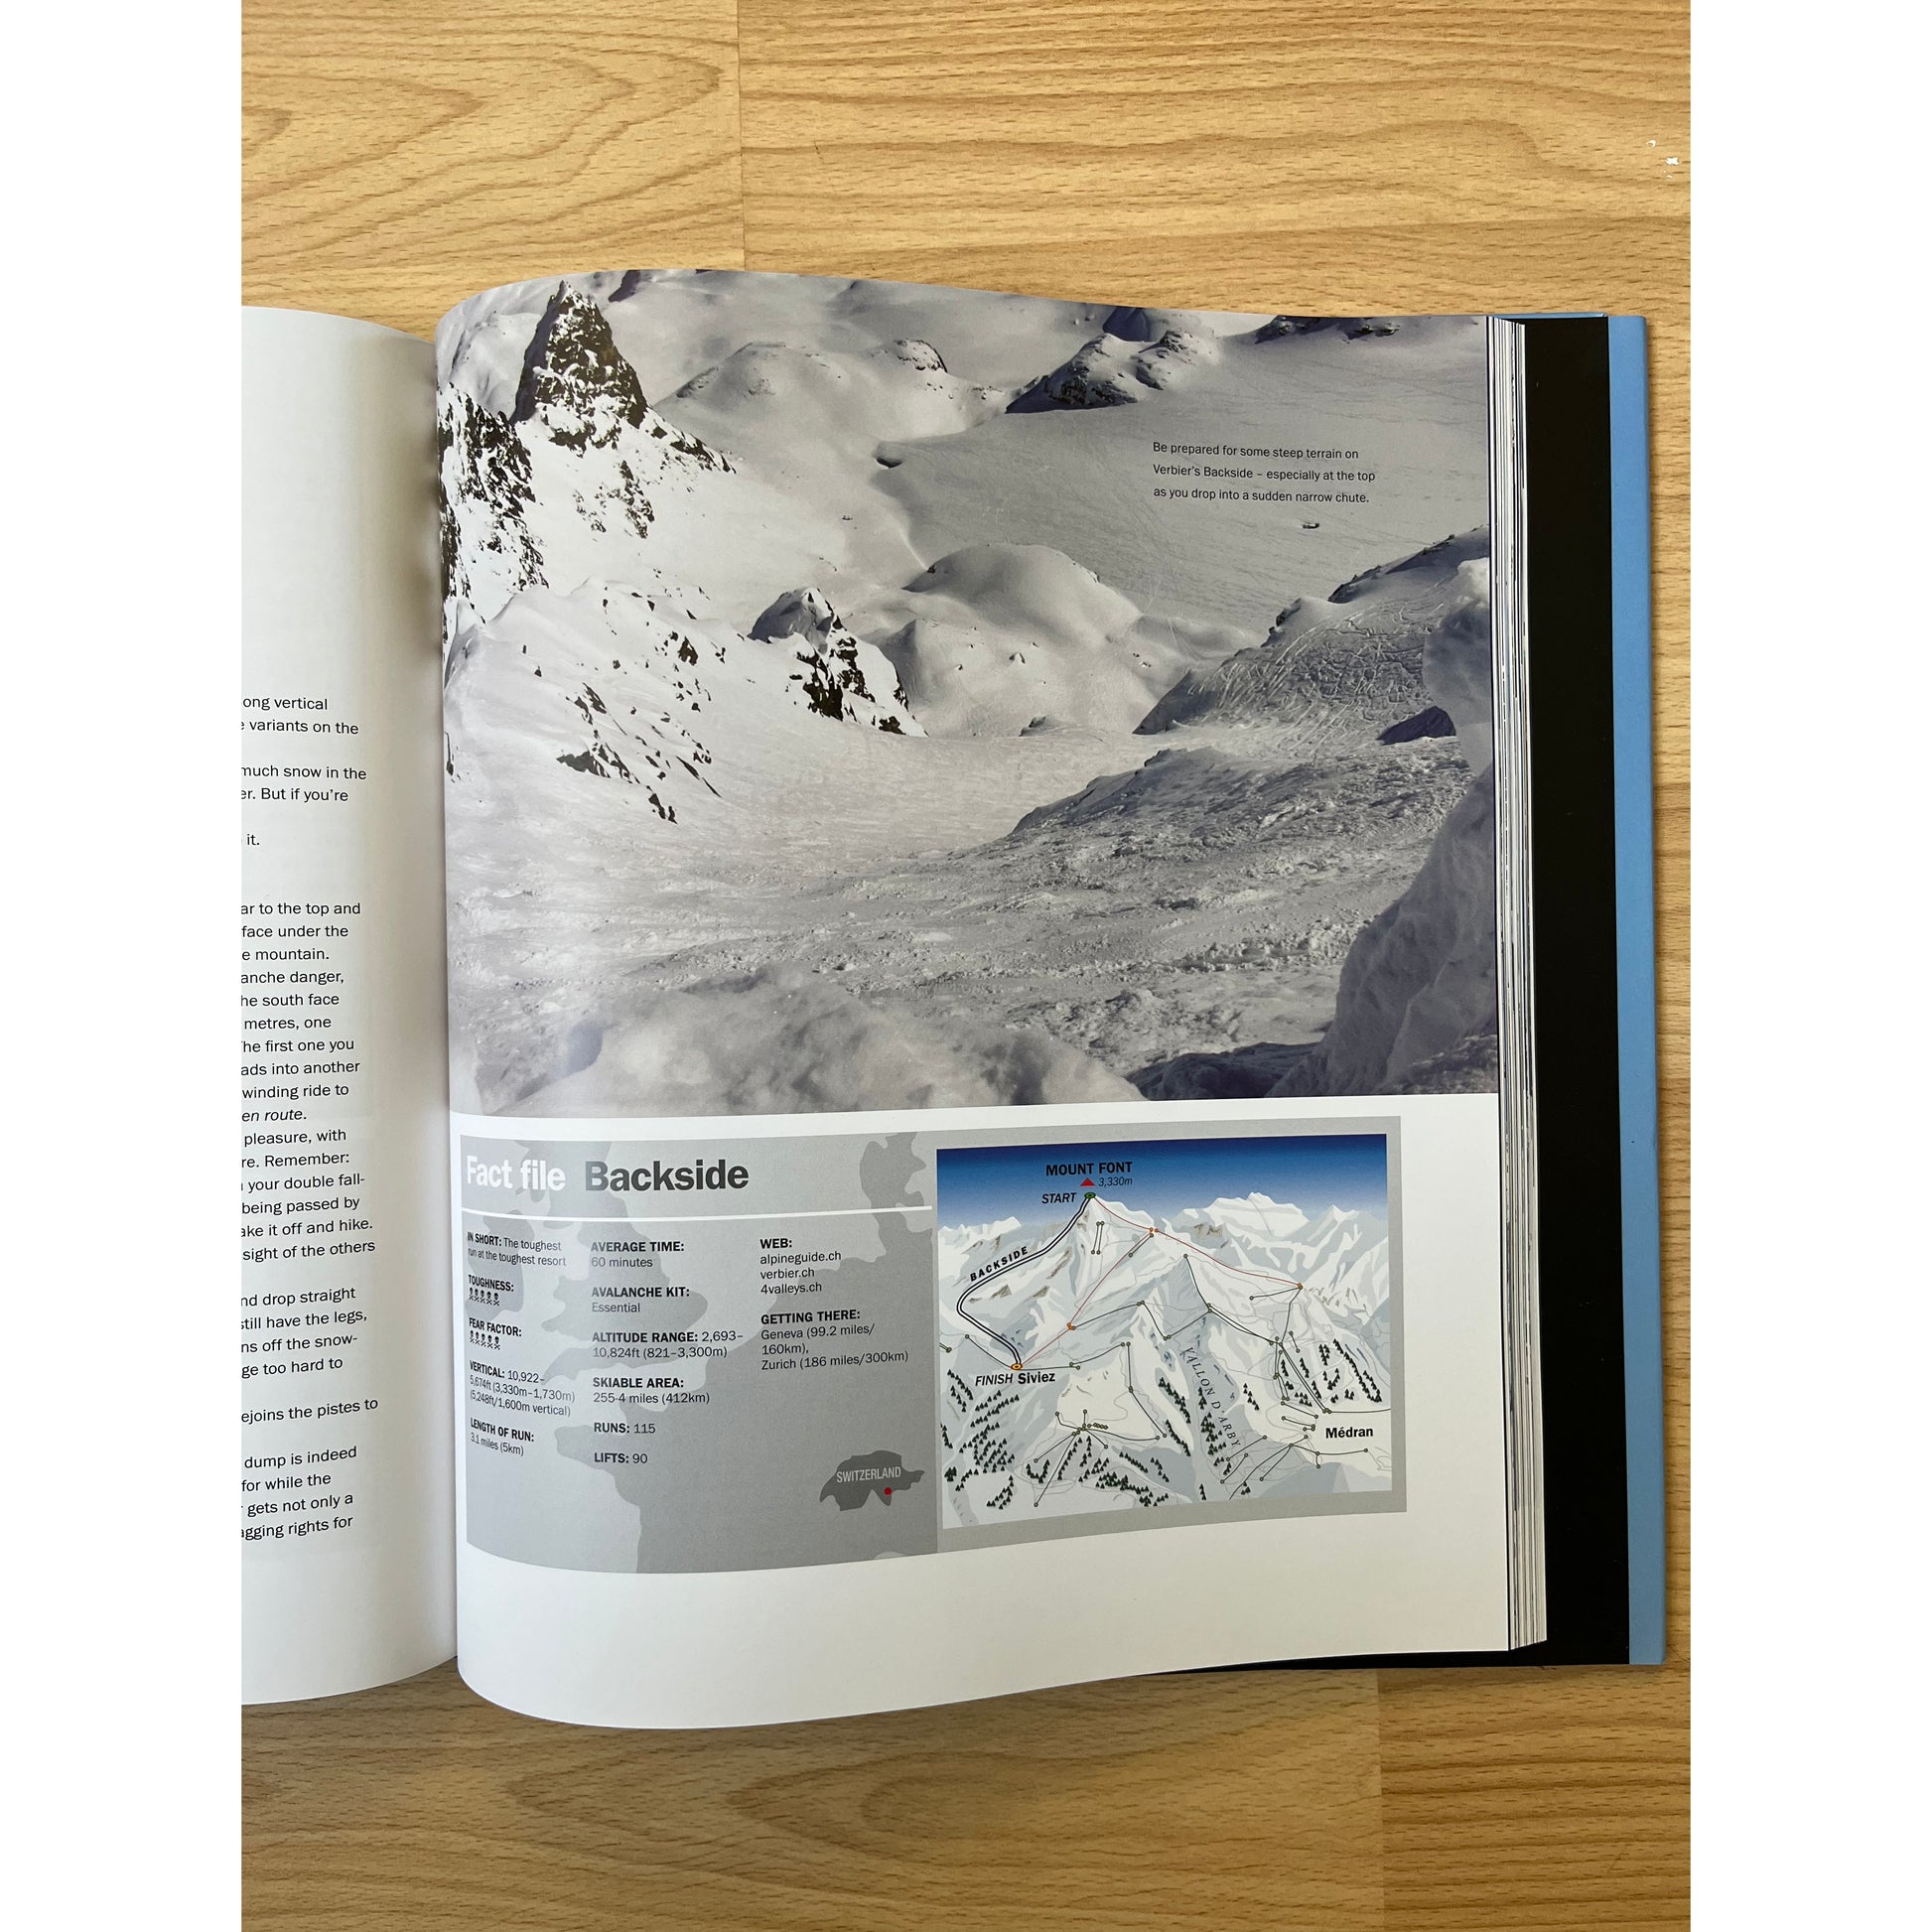 Powder The Greatest Ski Runs on the Planet. Patrick Thorne | Backcountry Books